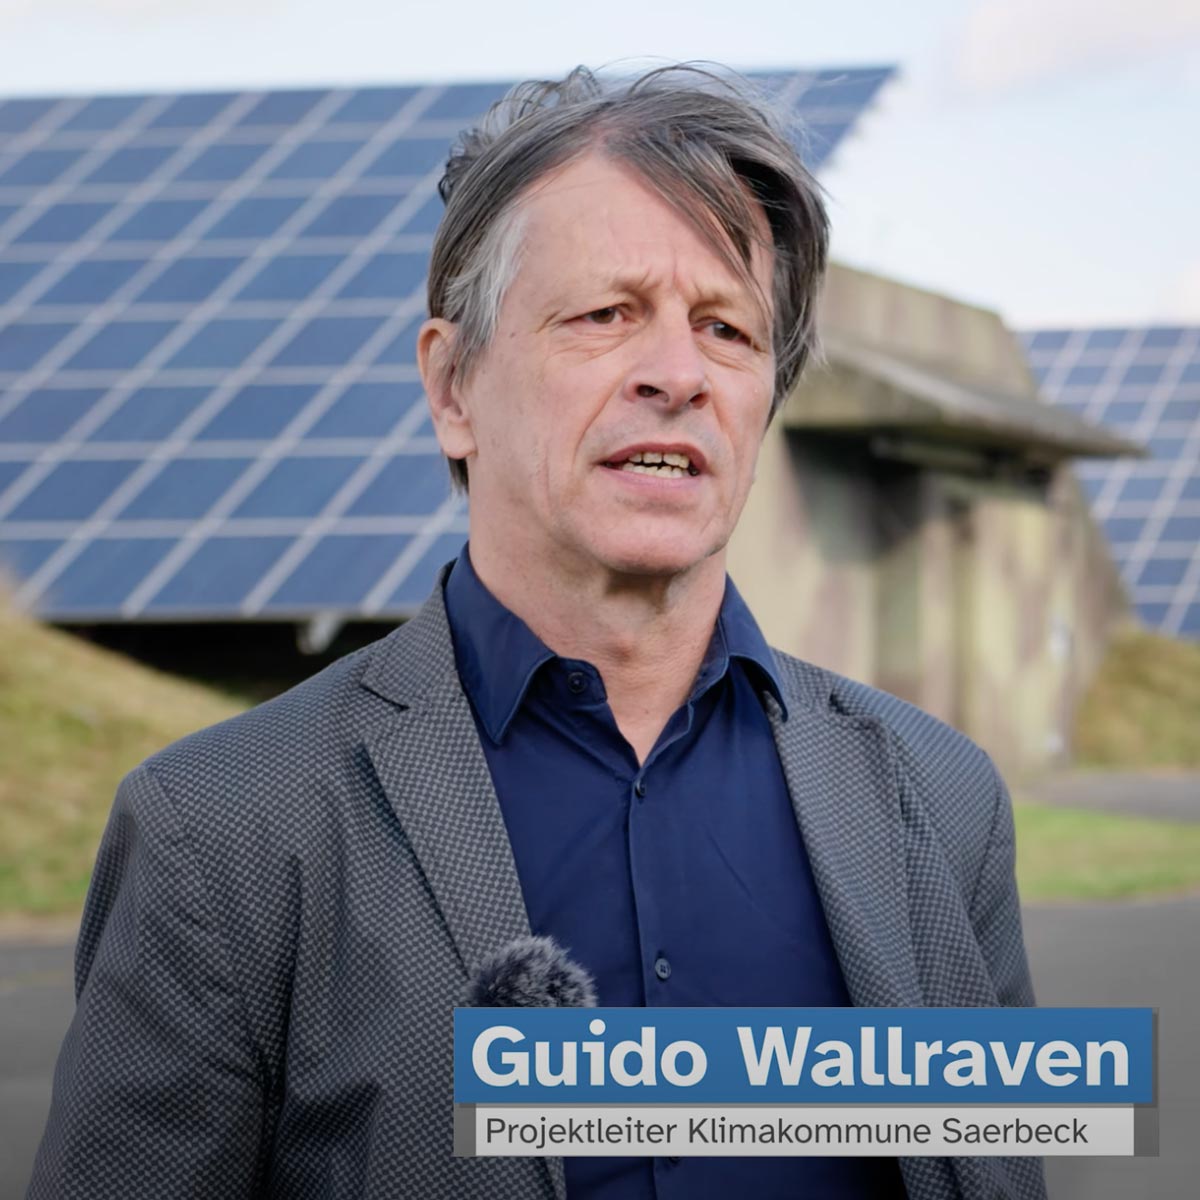 Guido Wallraven Projektleiter Klimakommune Saerbeck